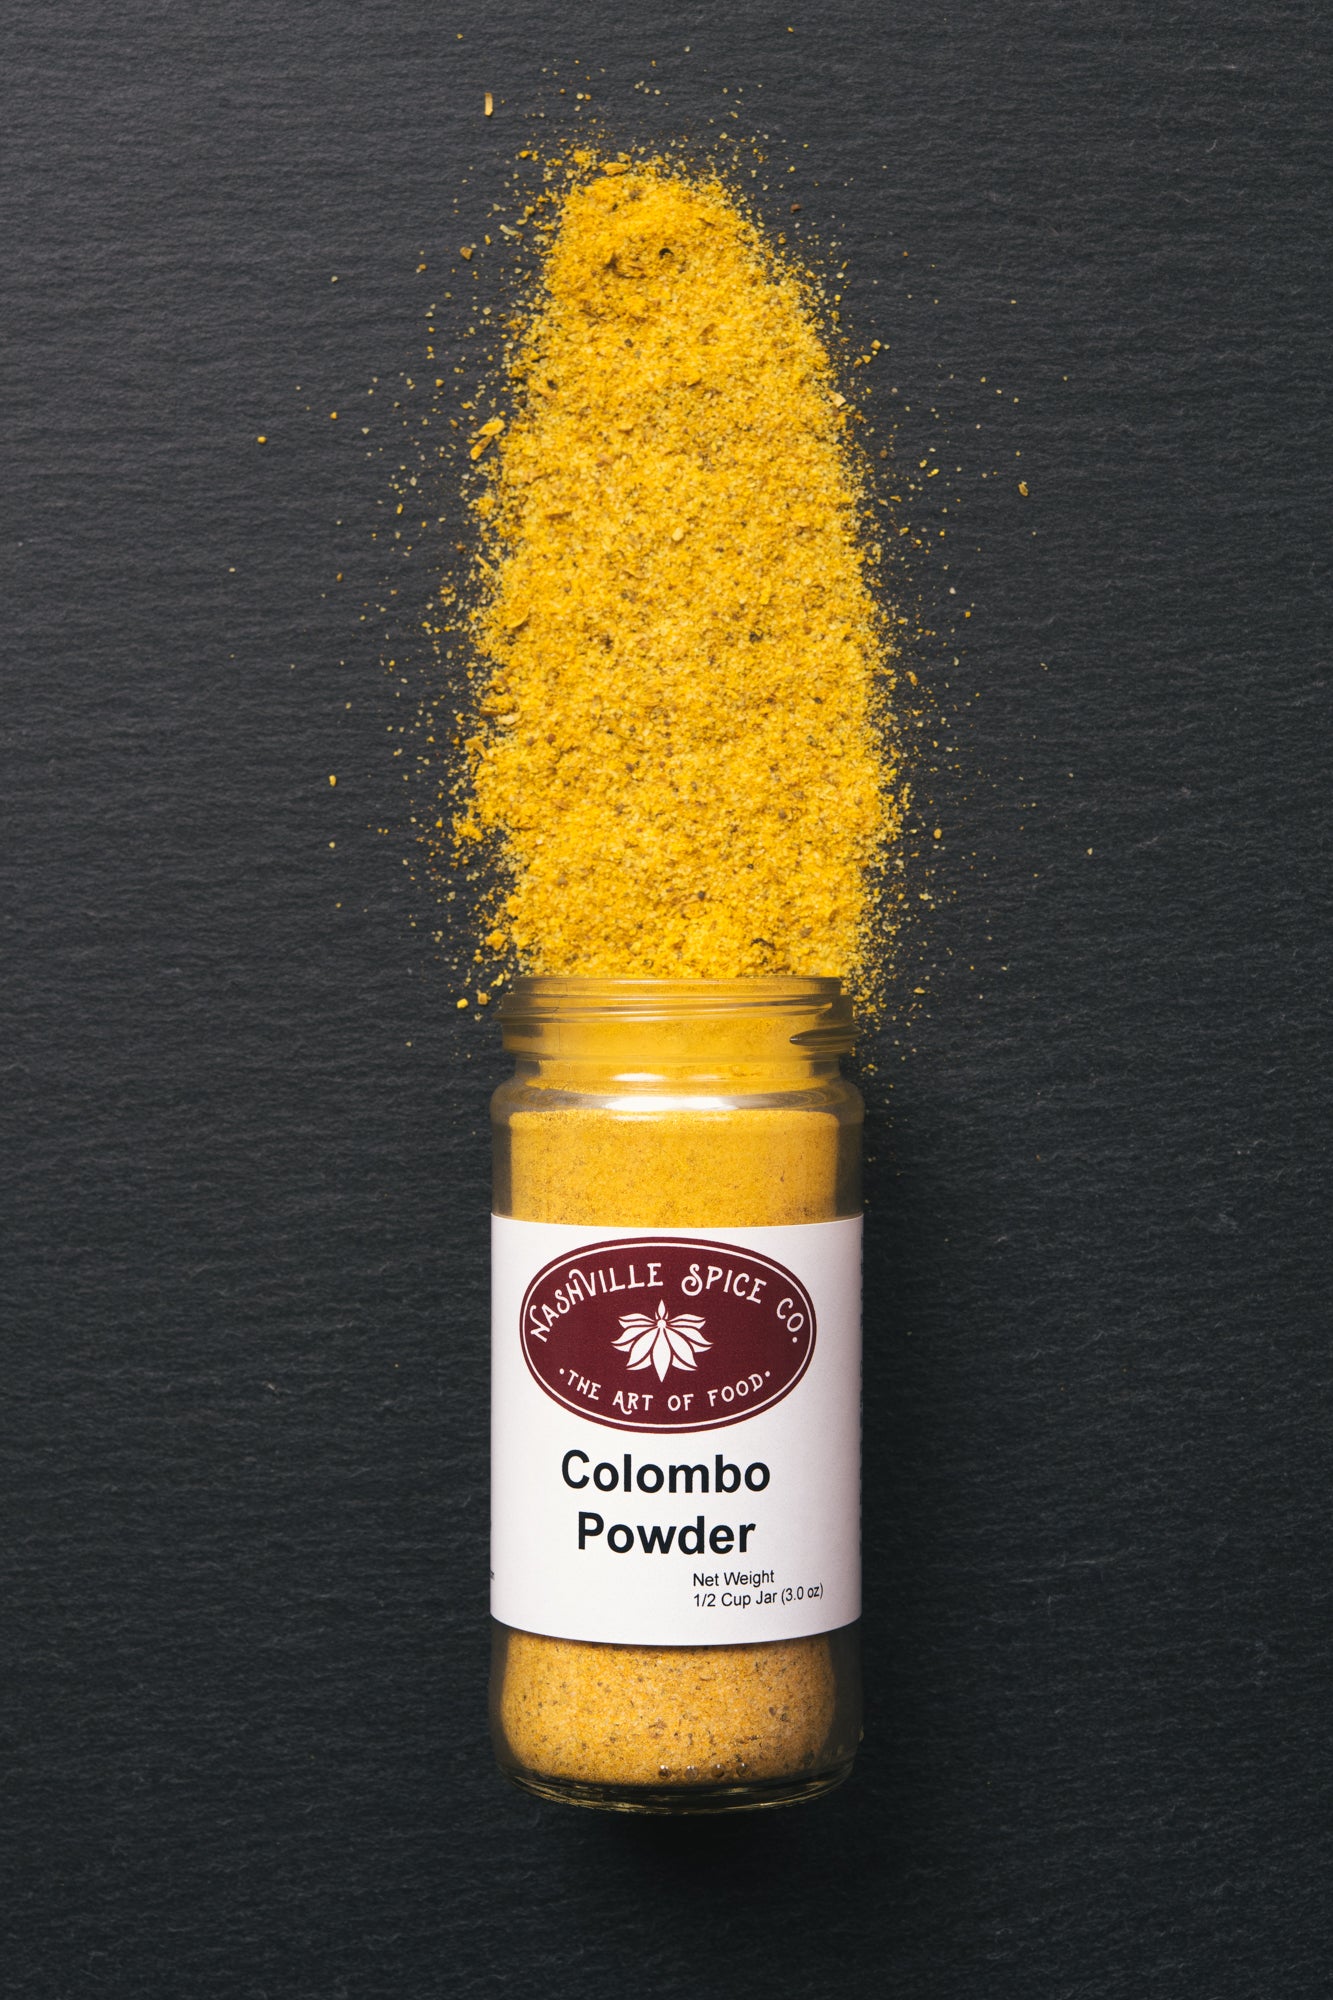 Colombo Powder